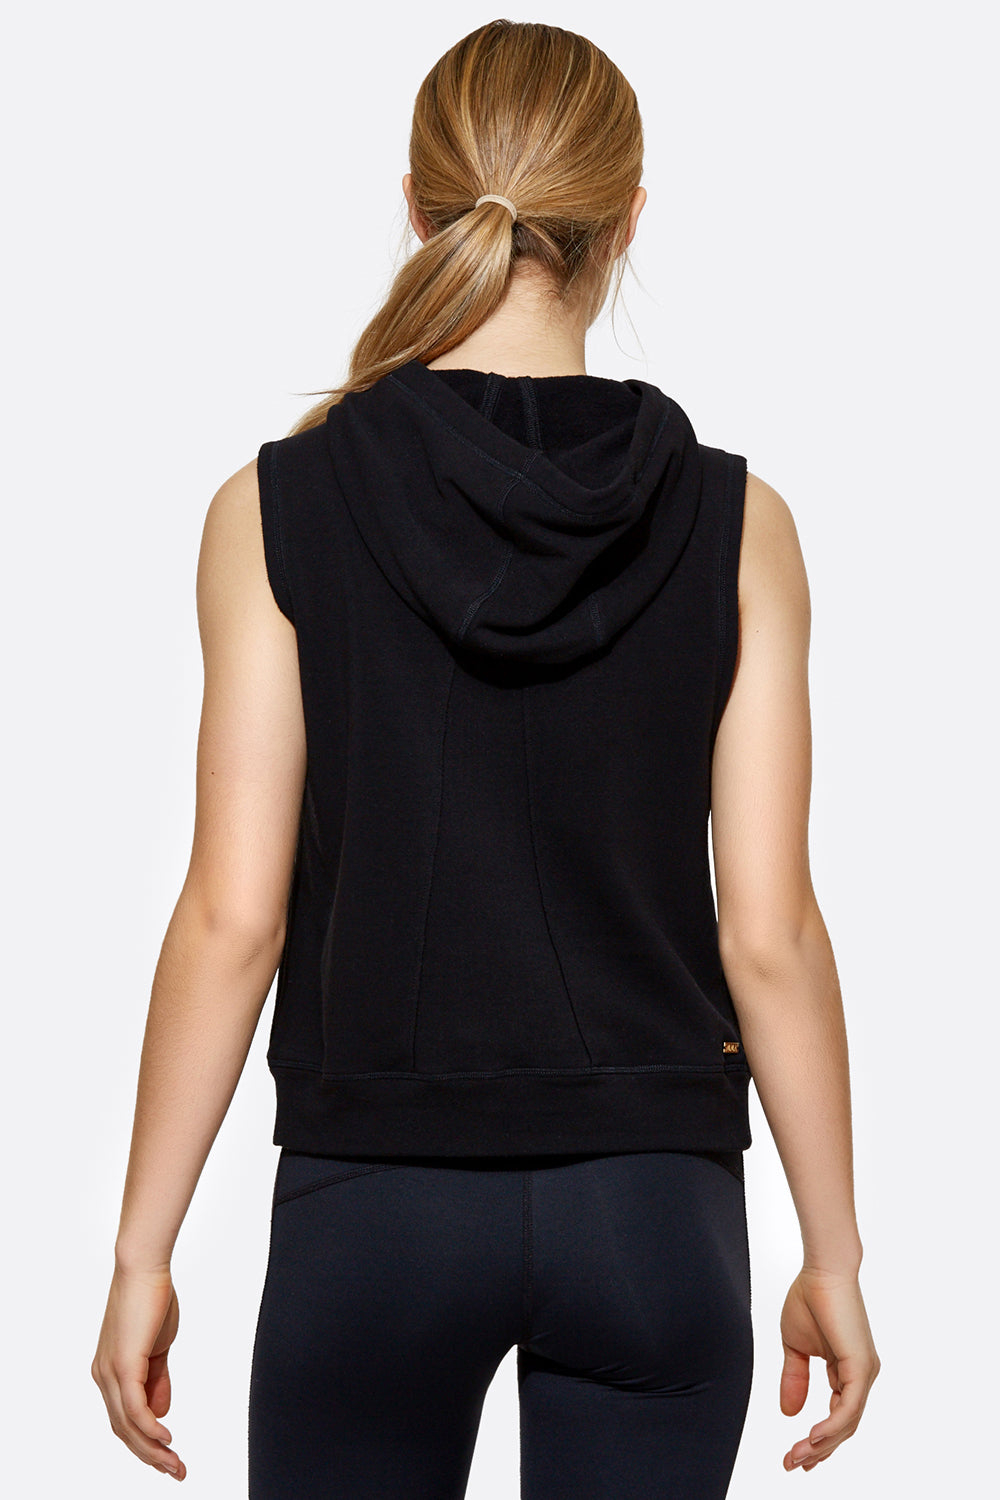 Alala women's Lace Up Hoodie Vest in black